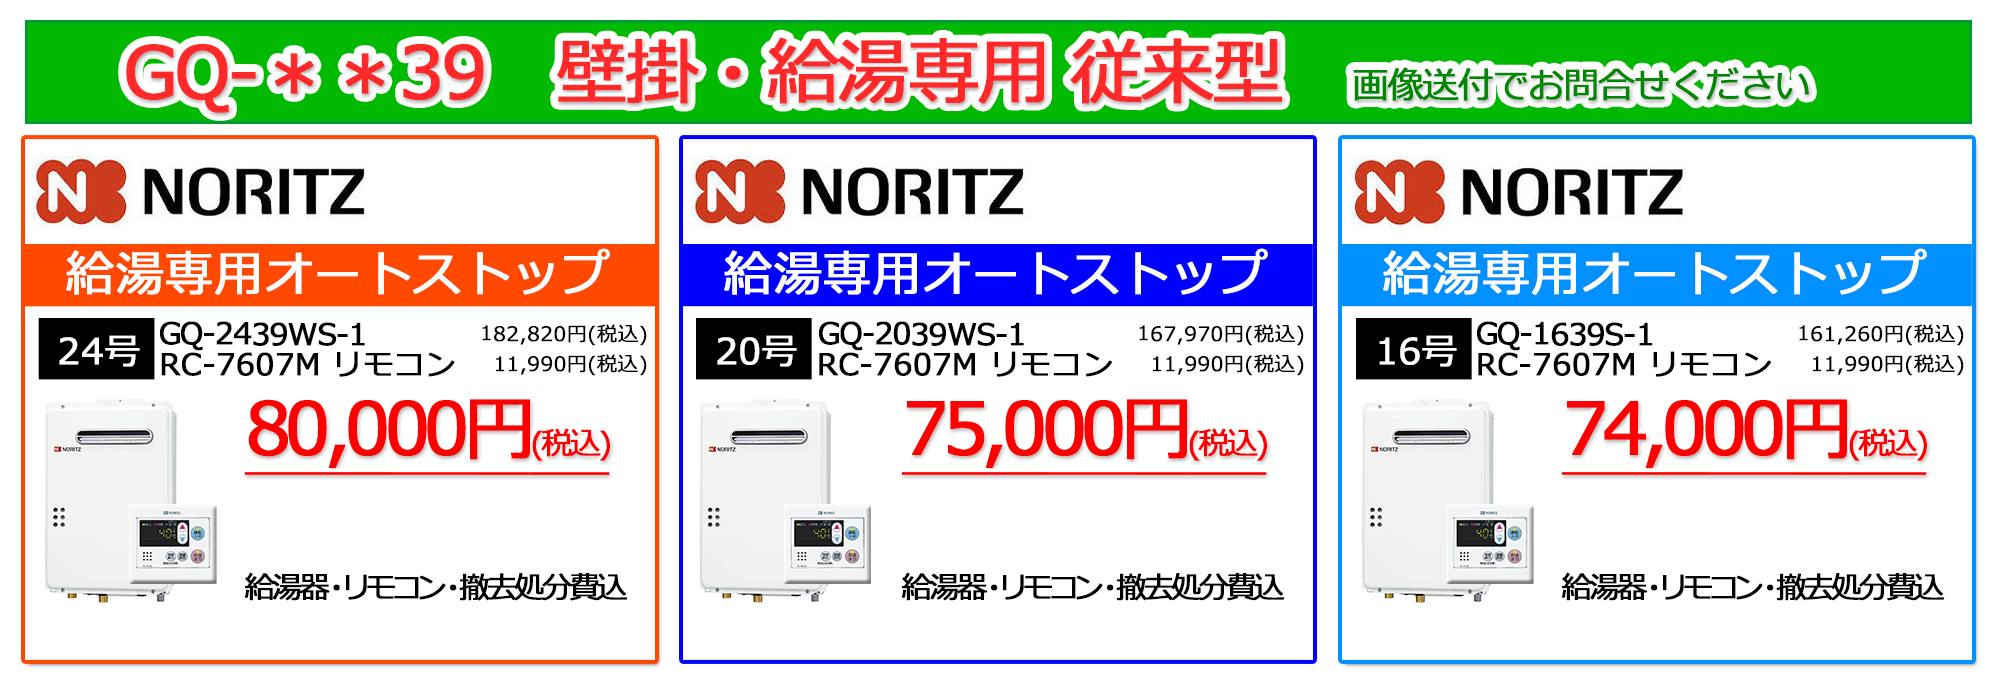 gt-2470_noritz_stock_campaignn"